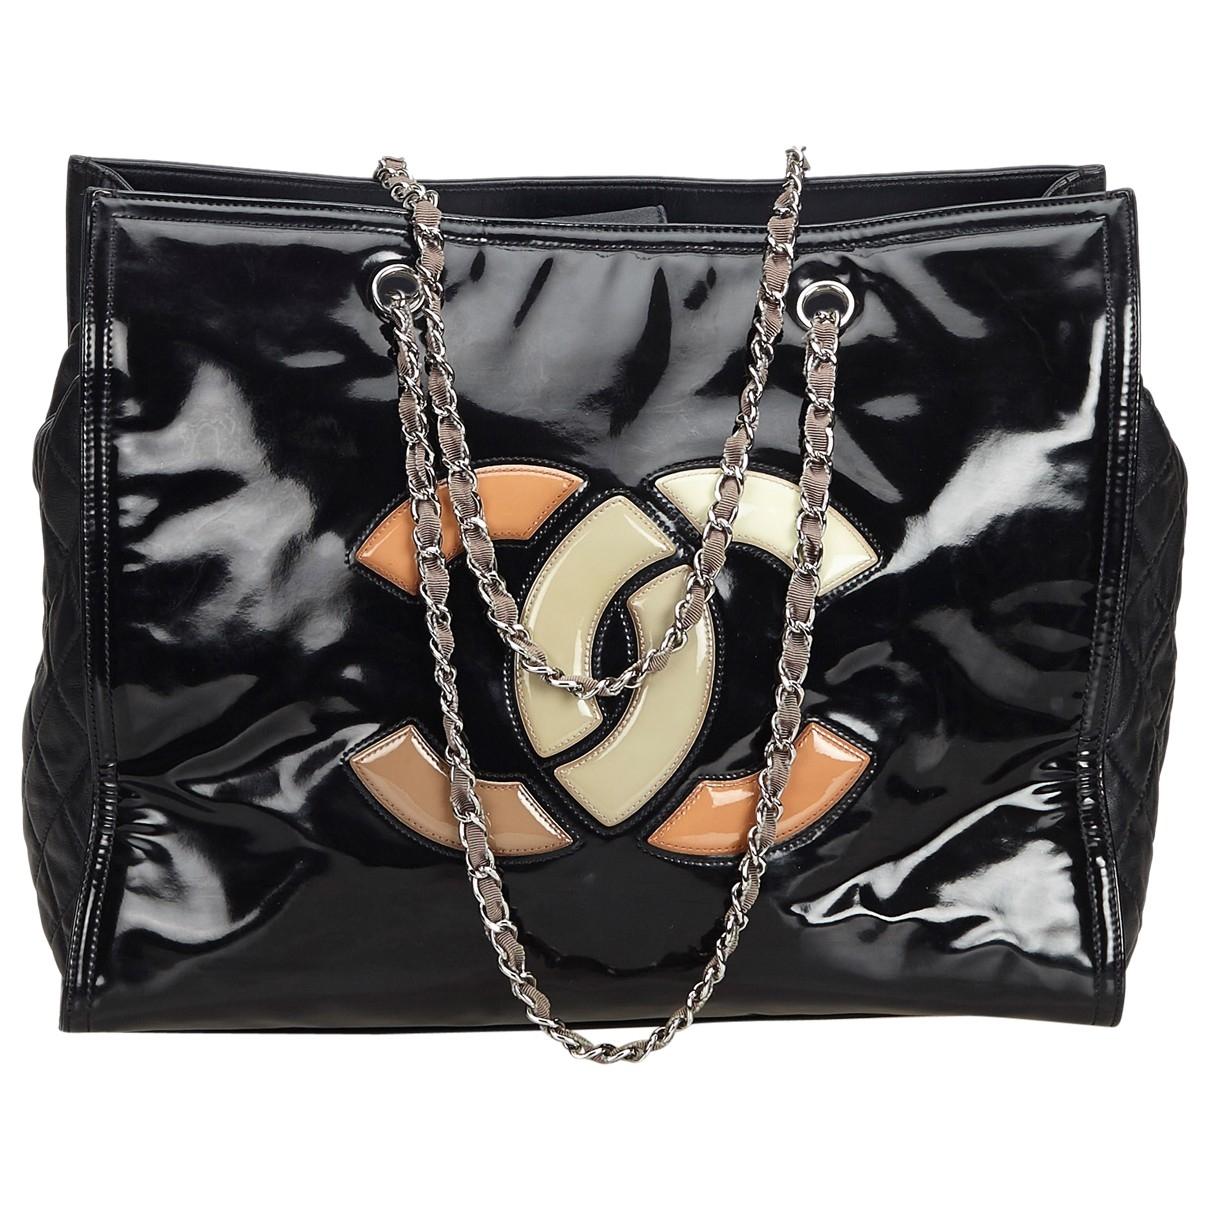 Chanel Black Patent Leather Handbag in Black - Lyst